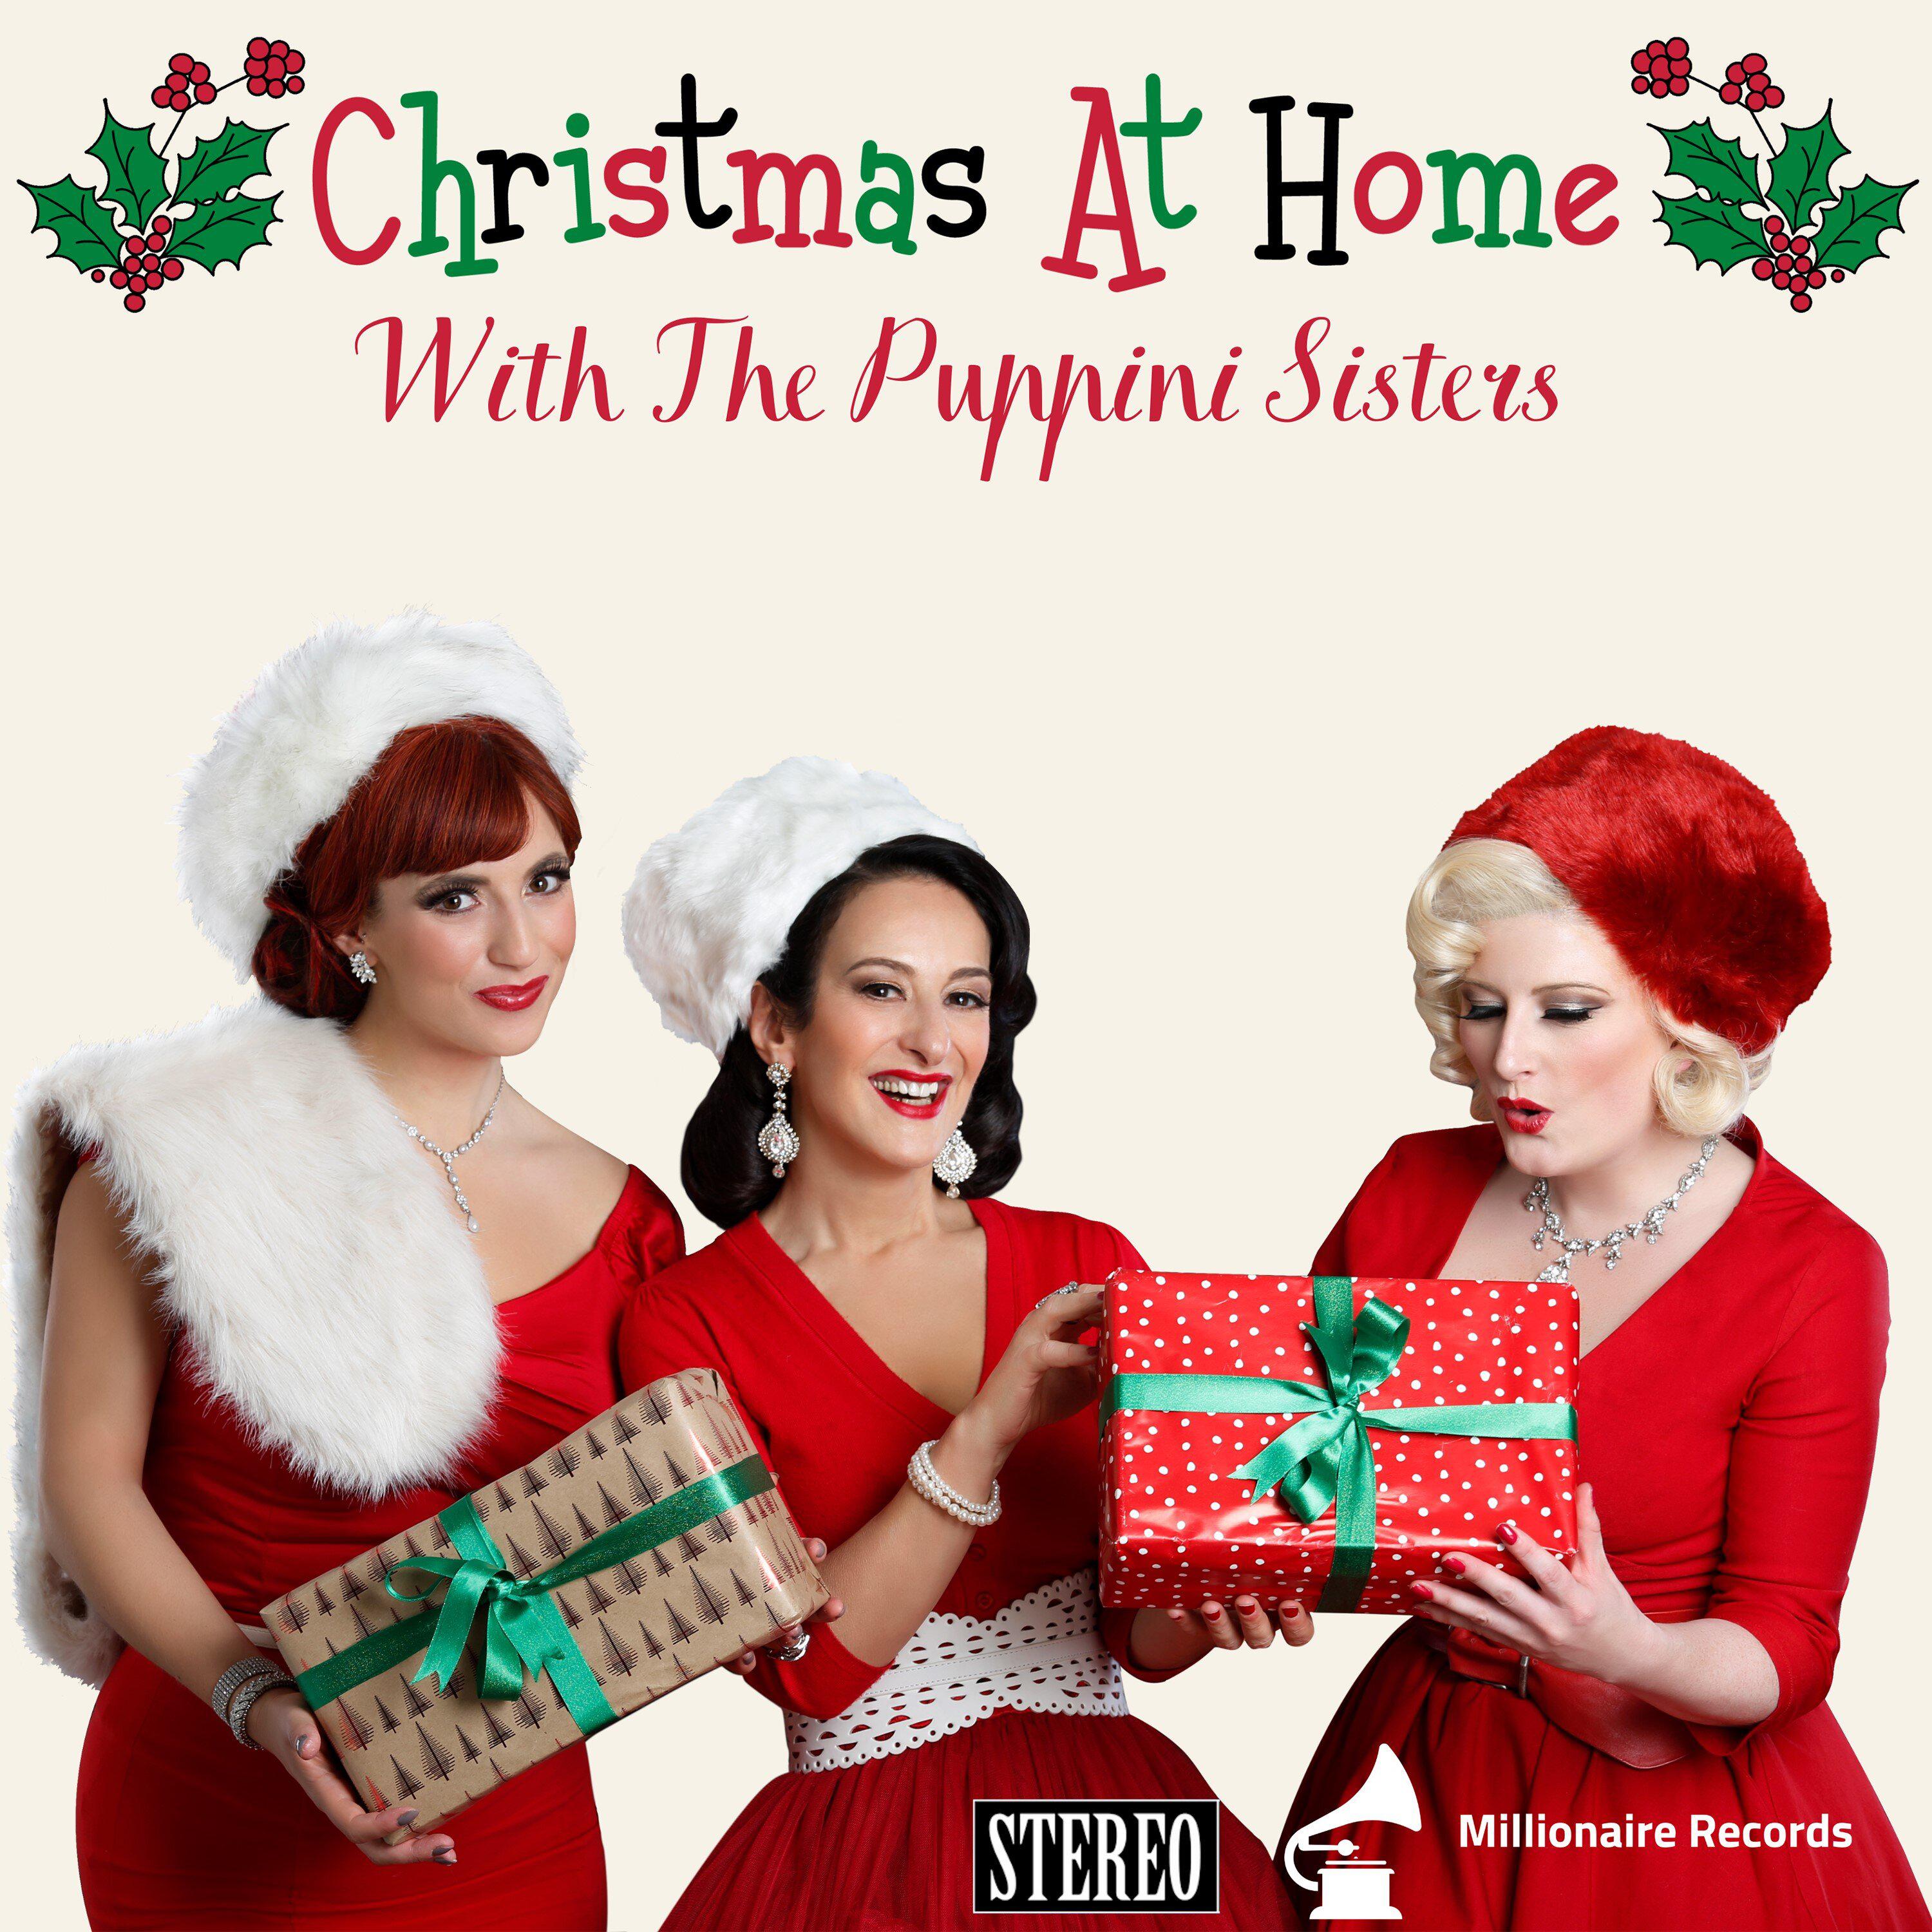 The Puppini Sisters - Santa Baby